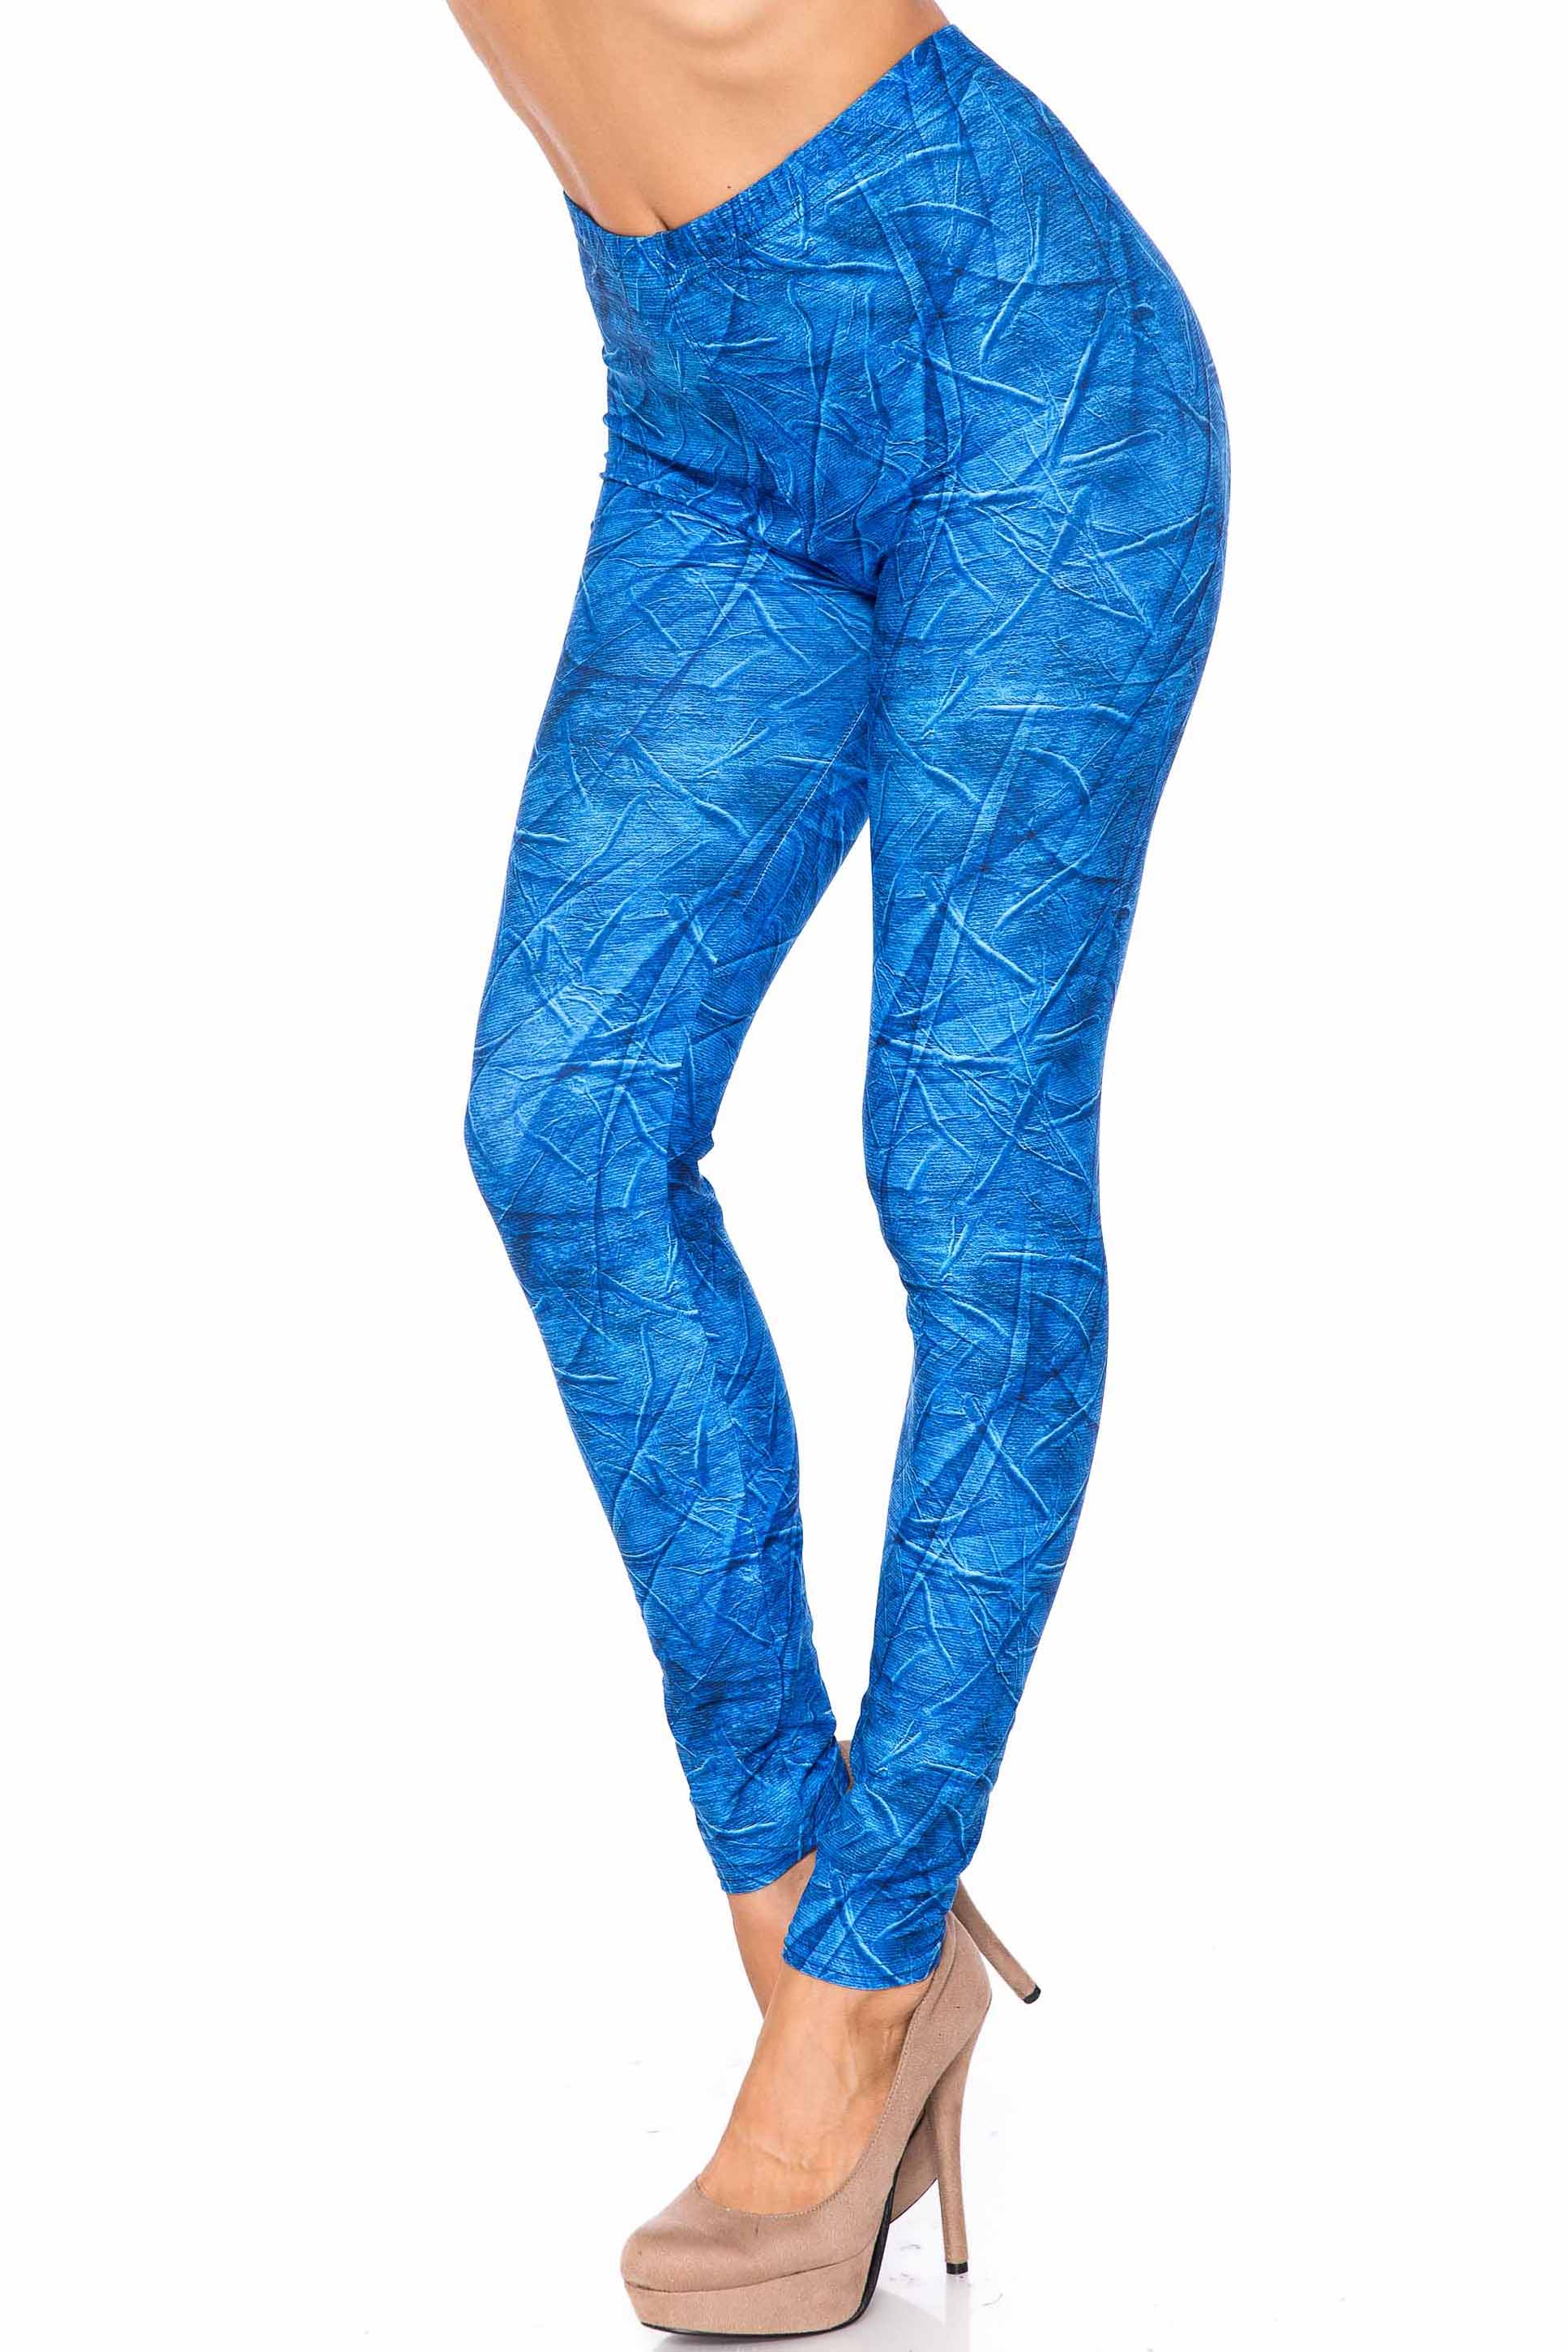 Wholesale Creamy Soft Blue Wrinkled Denim Kids Leggings - USA Fashion™